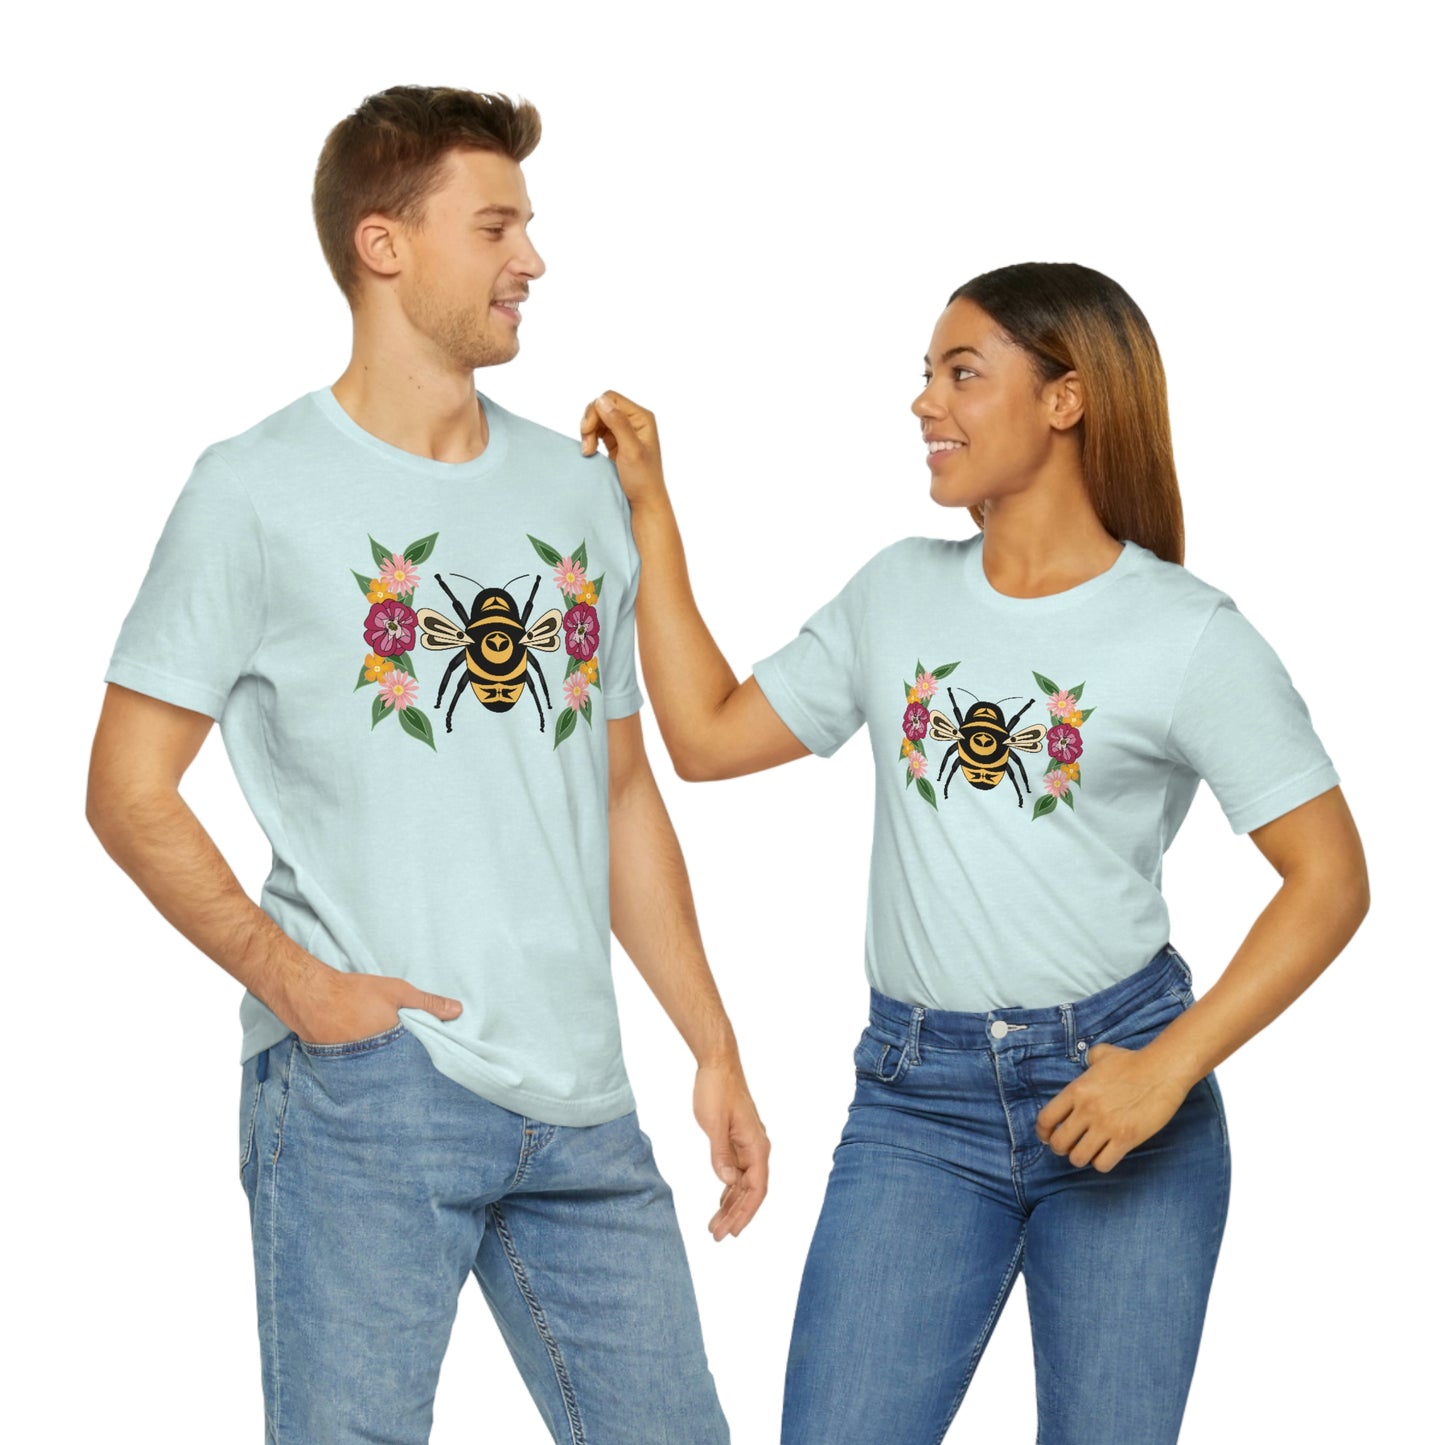 Indigenous Bumble Bee Tshirt Coast Salish Art Cute Summer Shirt Unique